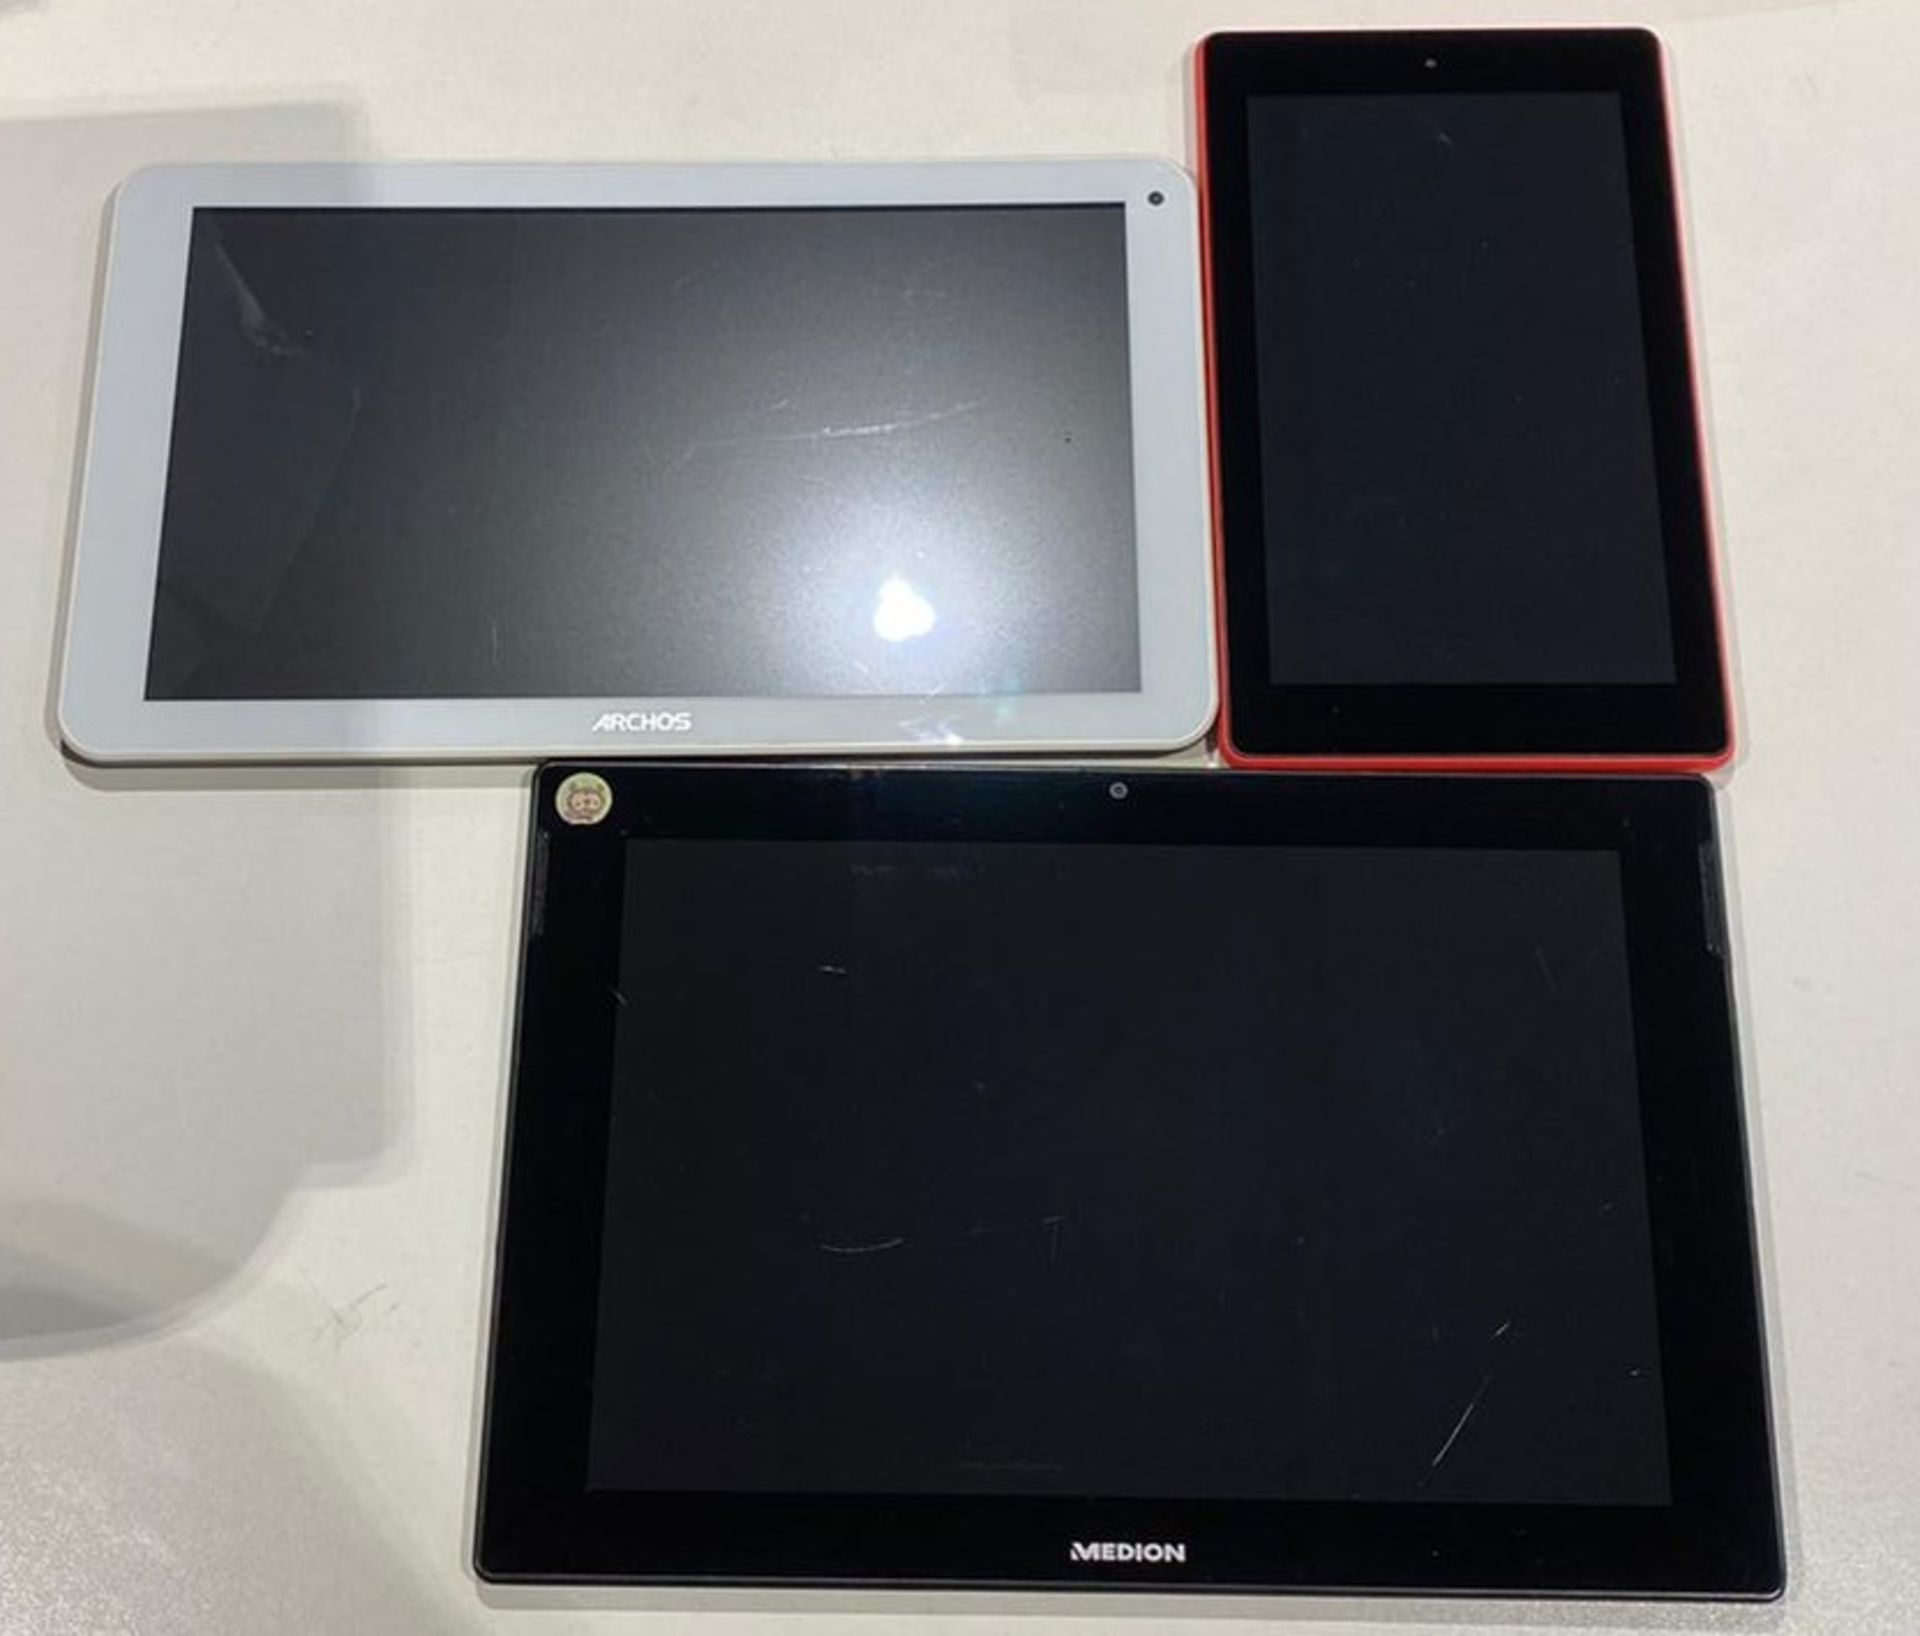 3 x Tablet set - Including: Amazon Fire 7, Medion Lifetab and Archos Neon -Location: Altrincham WA14